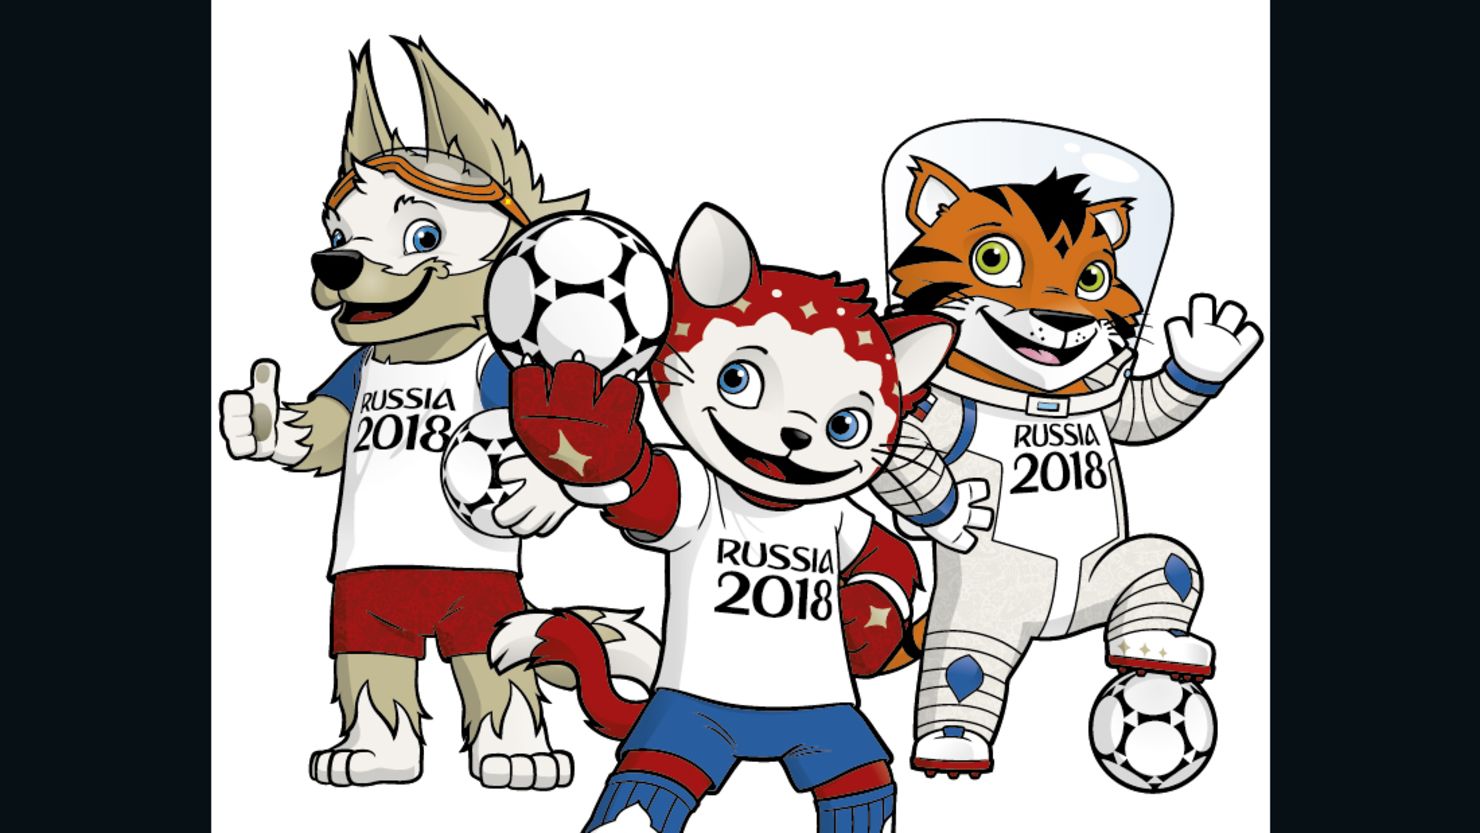 Rusia 2018 world cup mascots 2